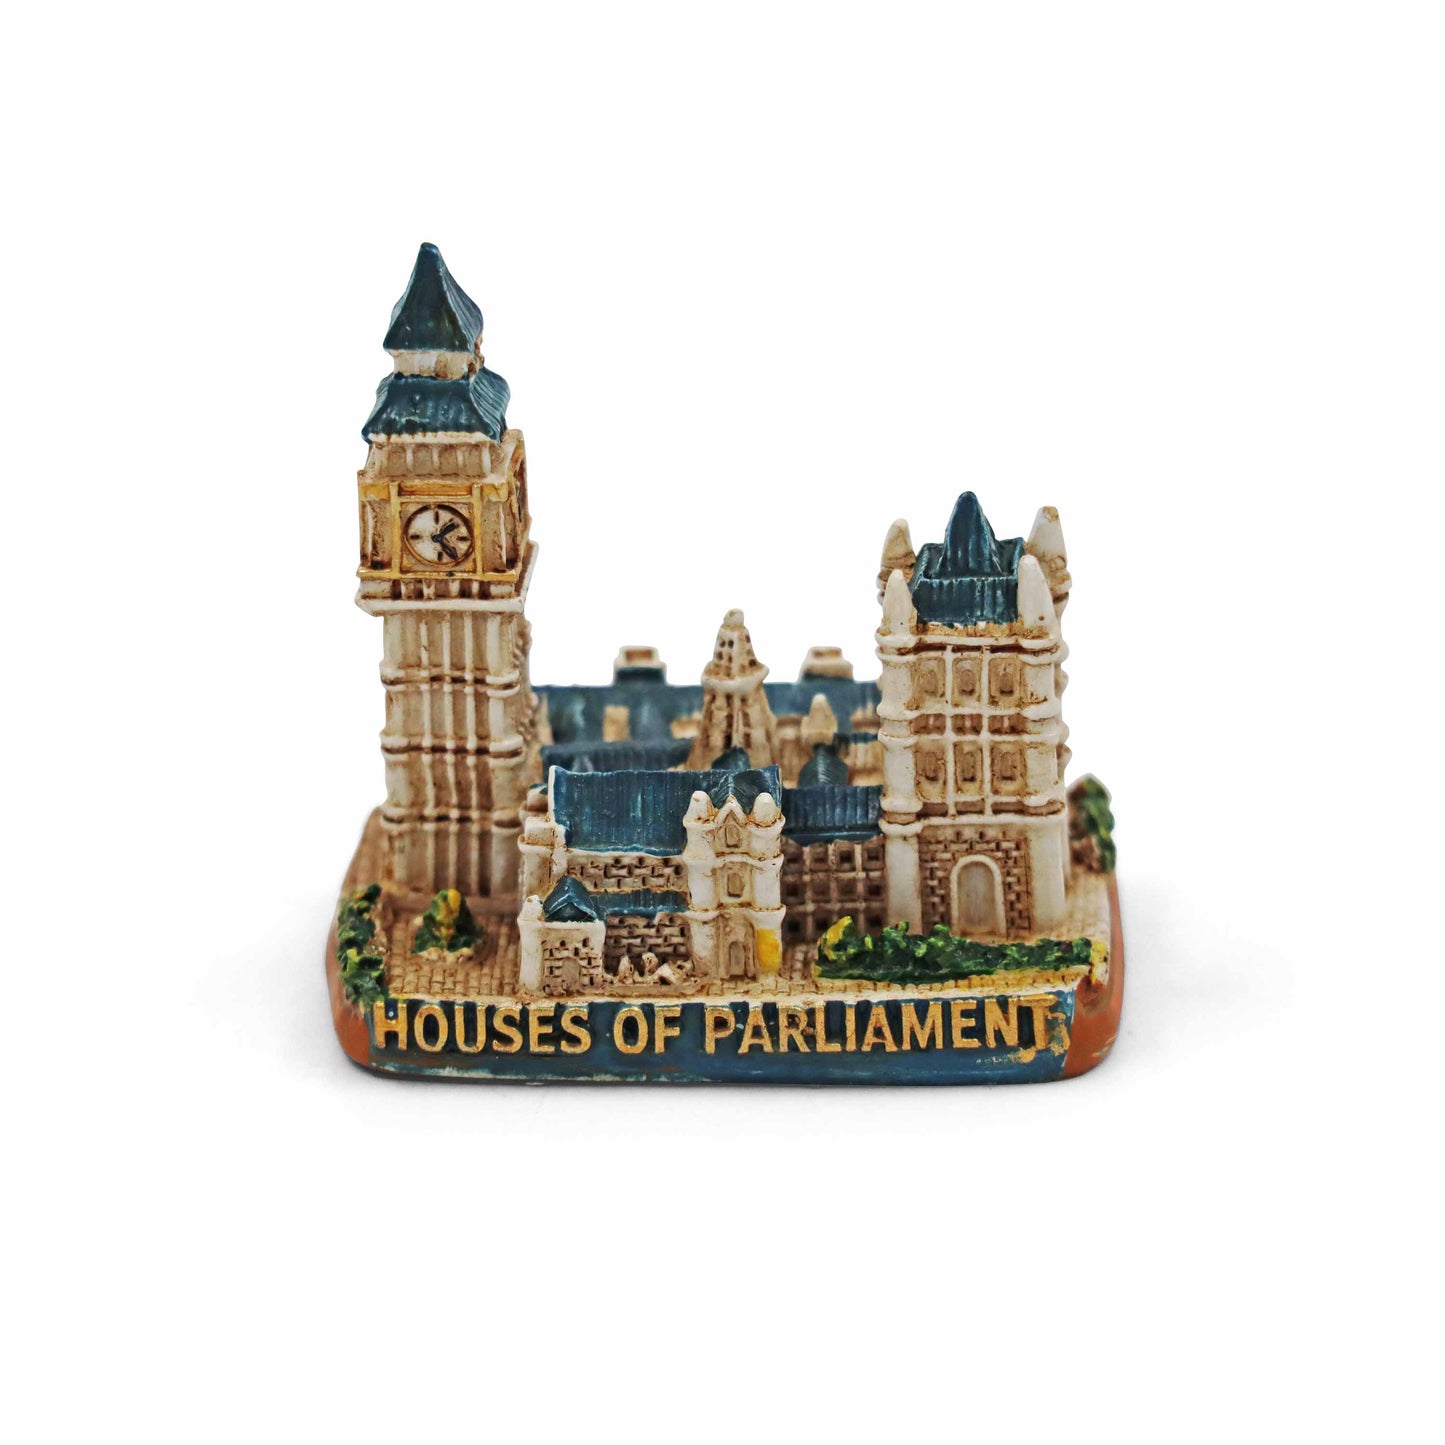 Houses of Parliament - Mini Stone Model - London Souvenirs